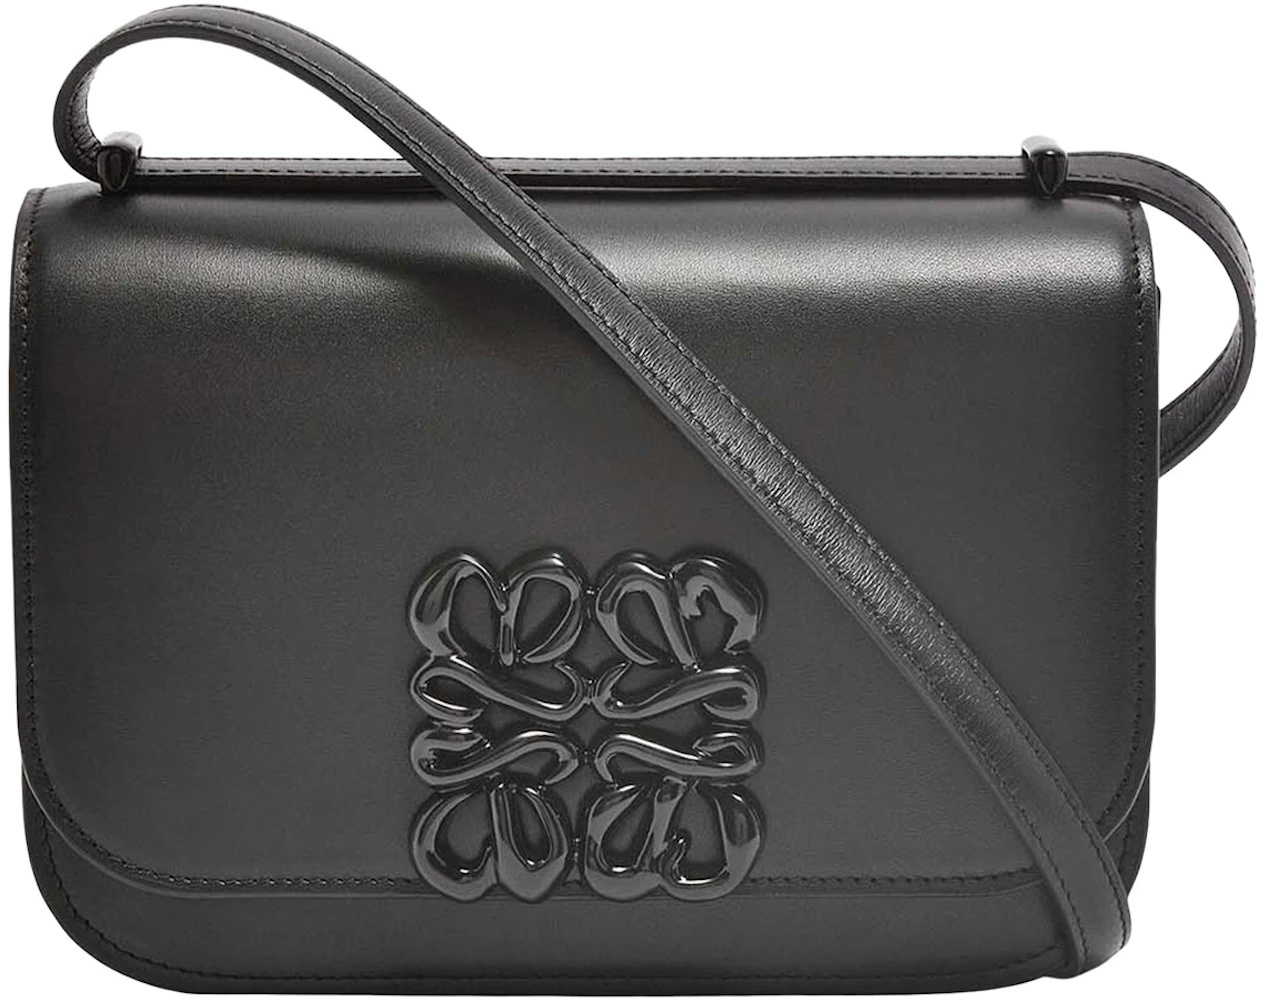 Goya leather satchel Loewe Black in Leather - 22682402